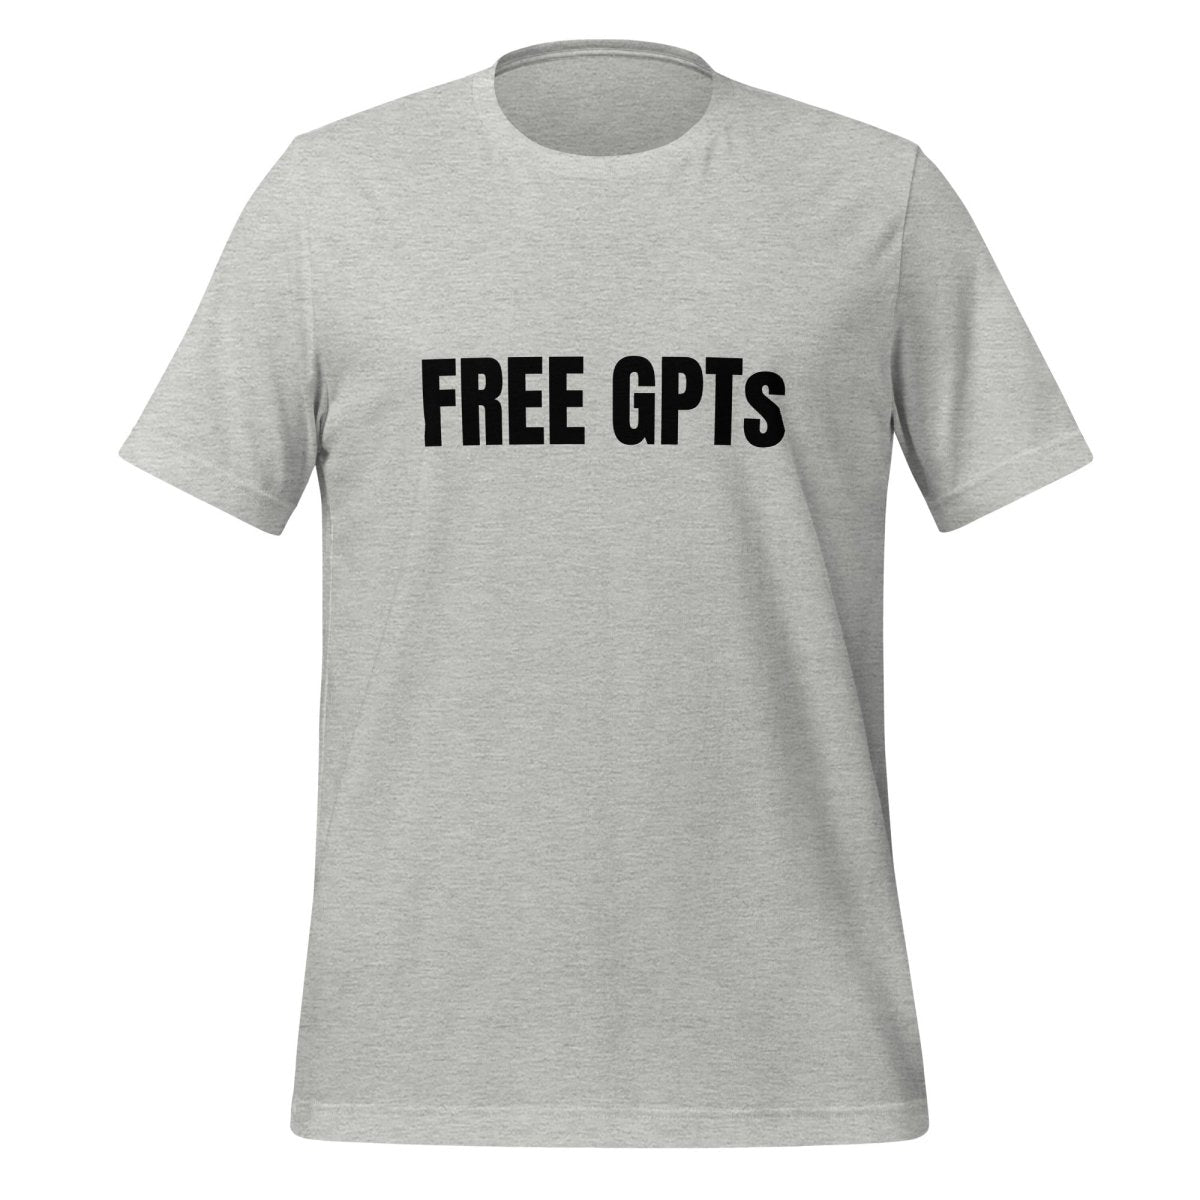 FREE GPTs T - Shirt (unisex) - Athletic Heather - AI Store